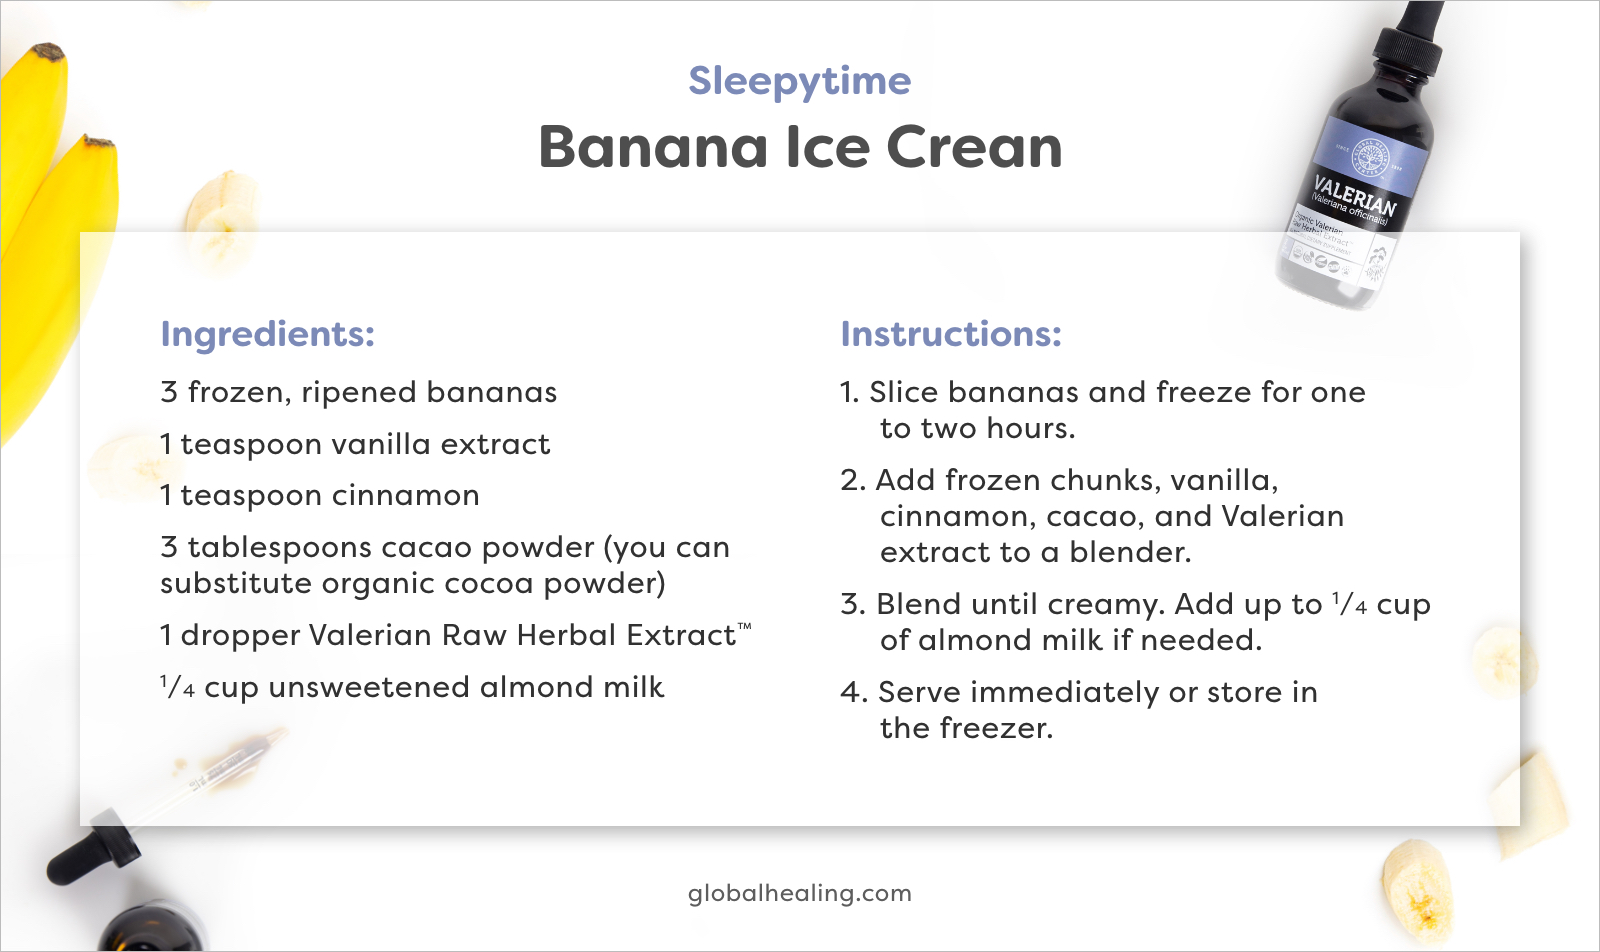 Sleepytime Banana Ice Cream recipe card.